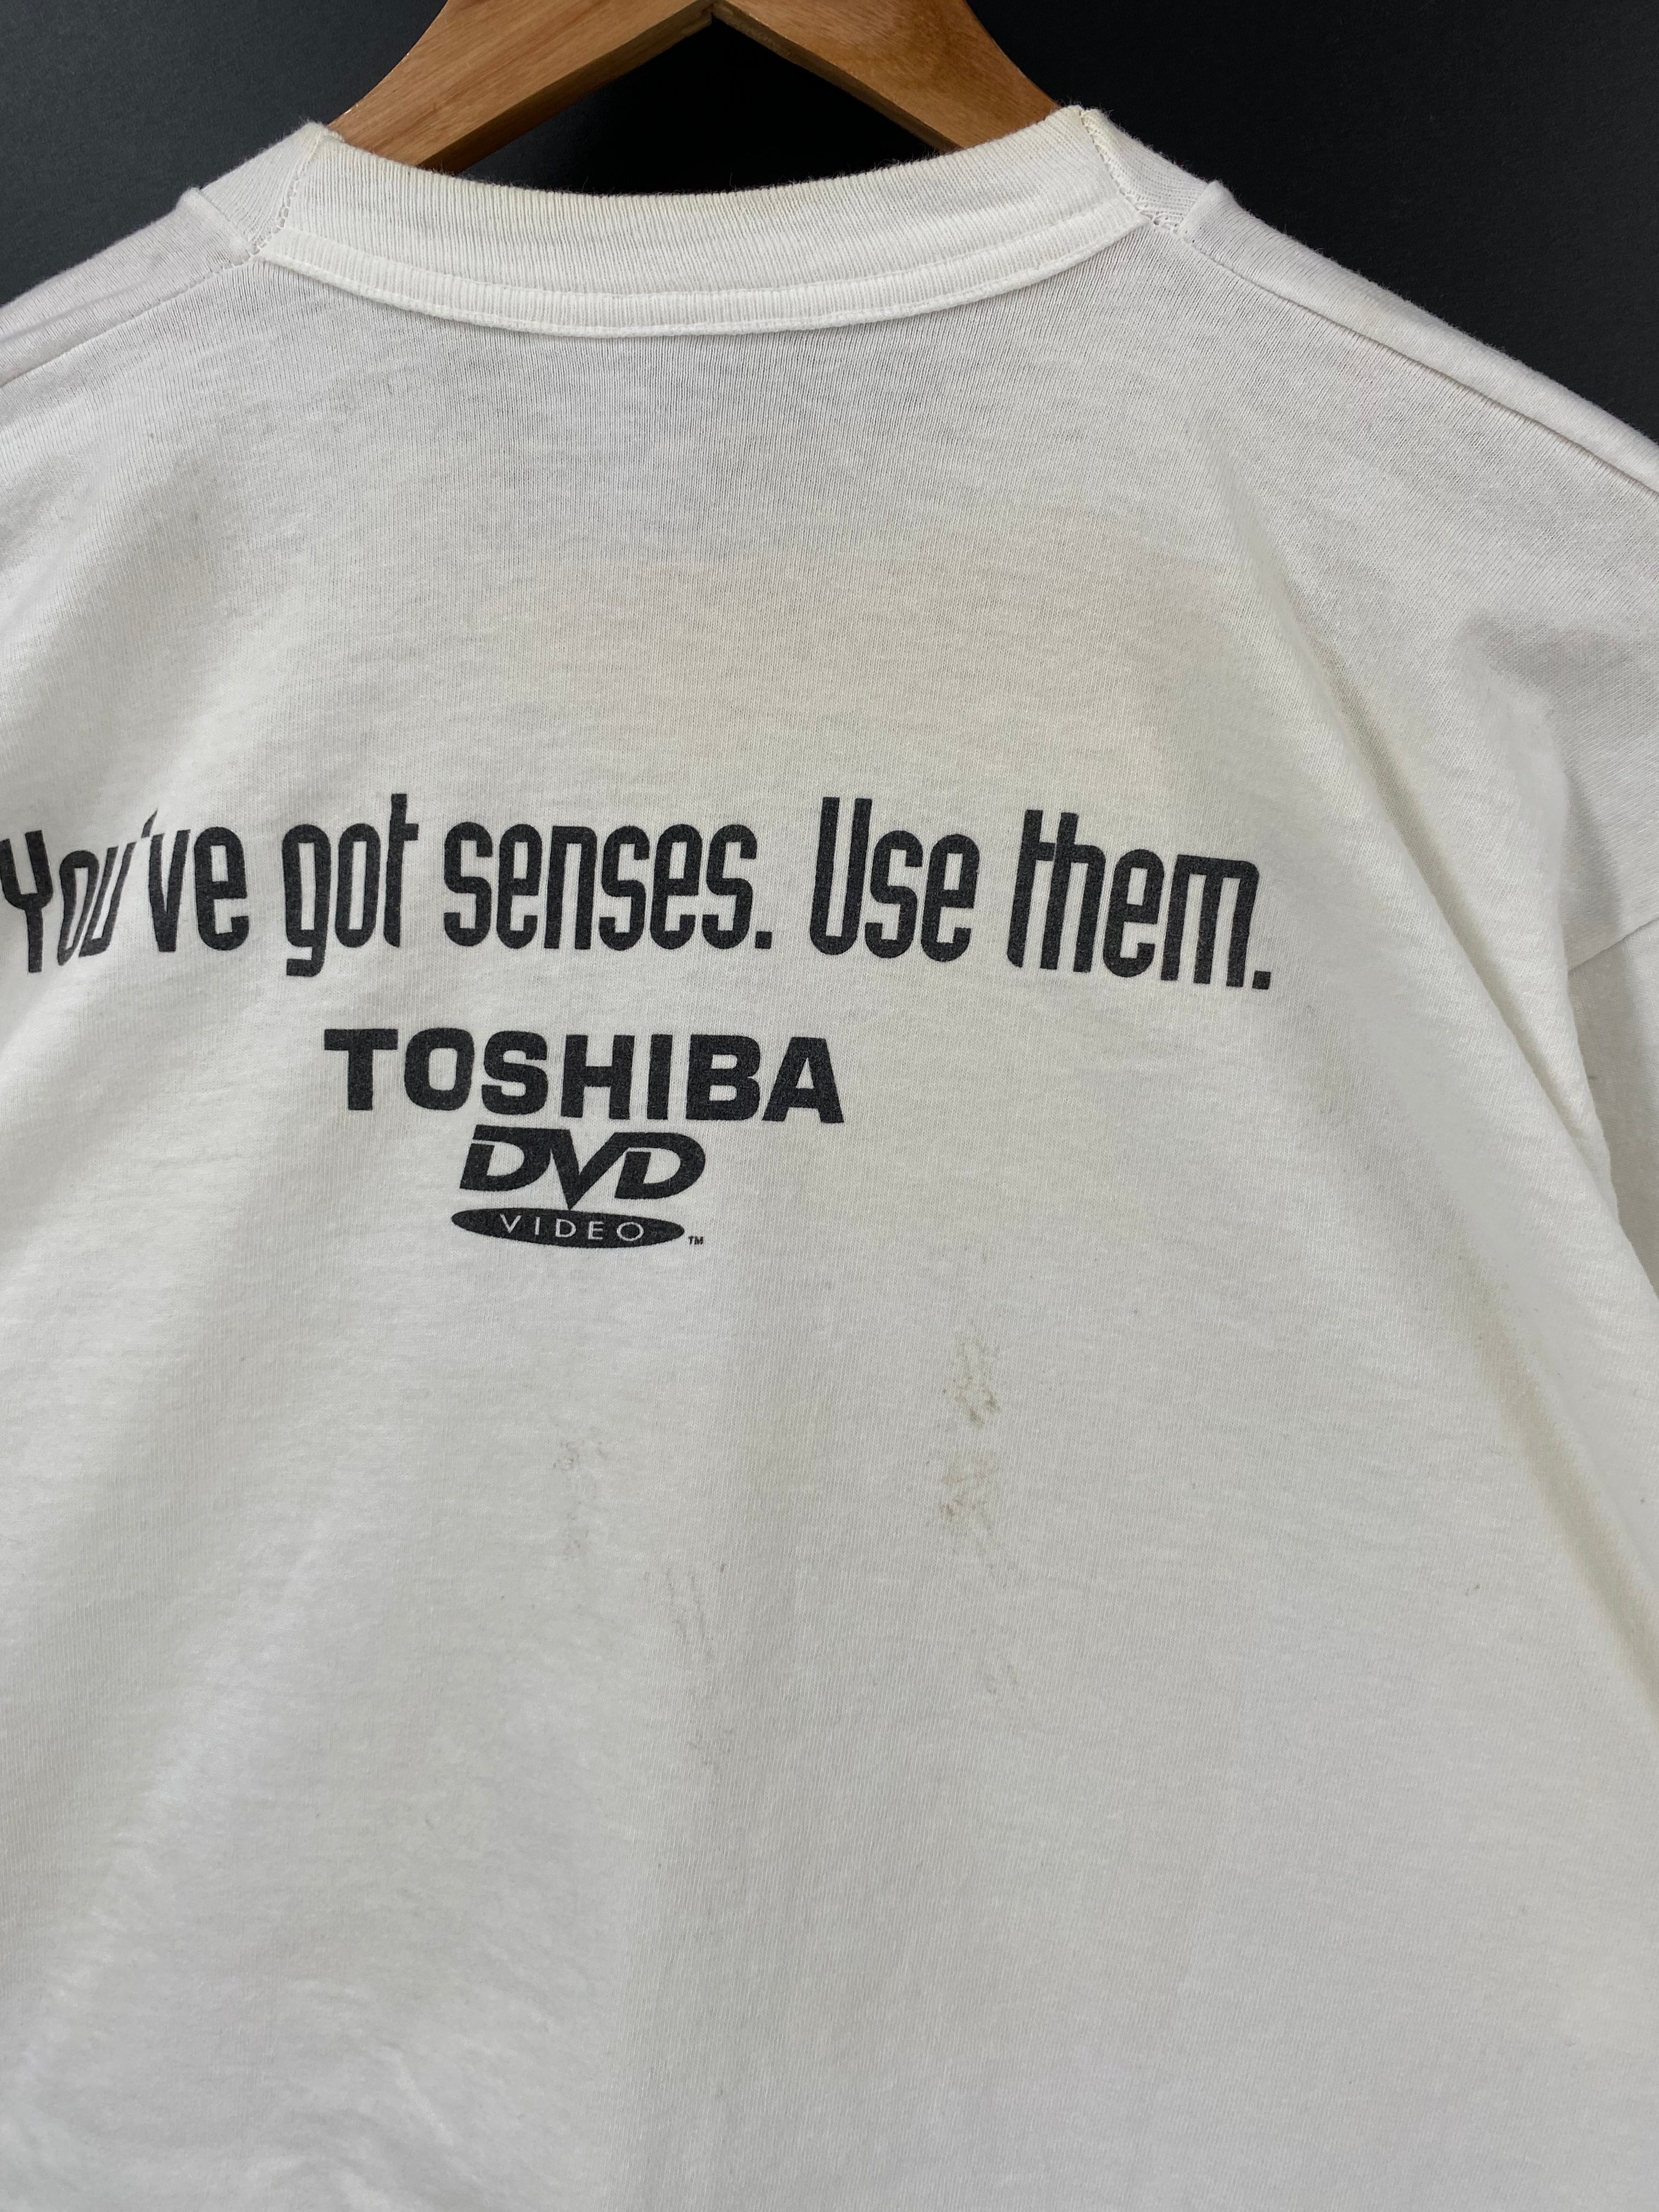 90s vintage TOSHIBA DVD プロモーションTシャツ企業